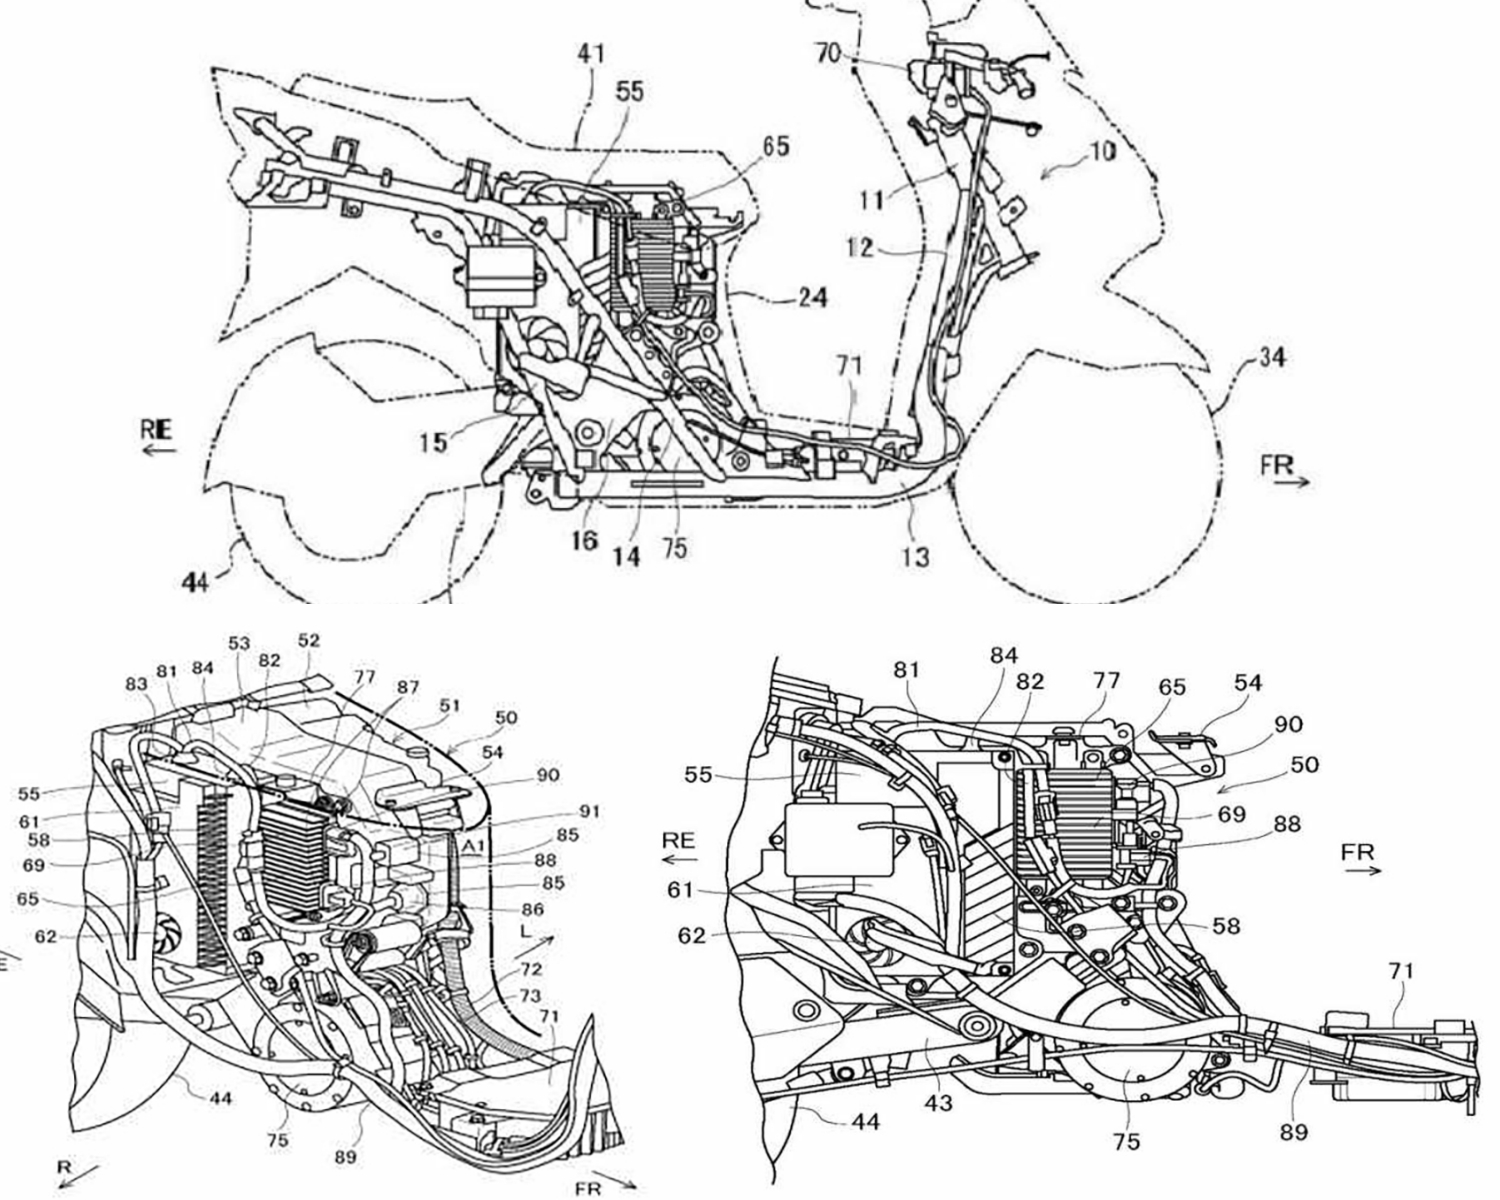 Planos de la patente del scooter eléctrico de Suzuki.